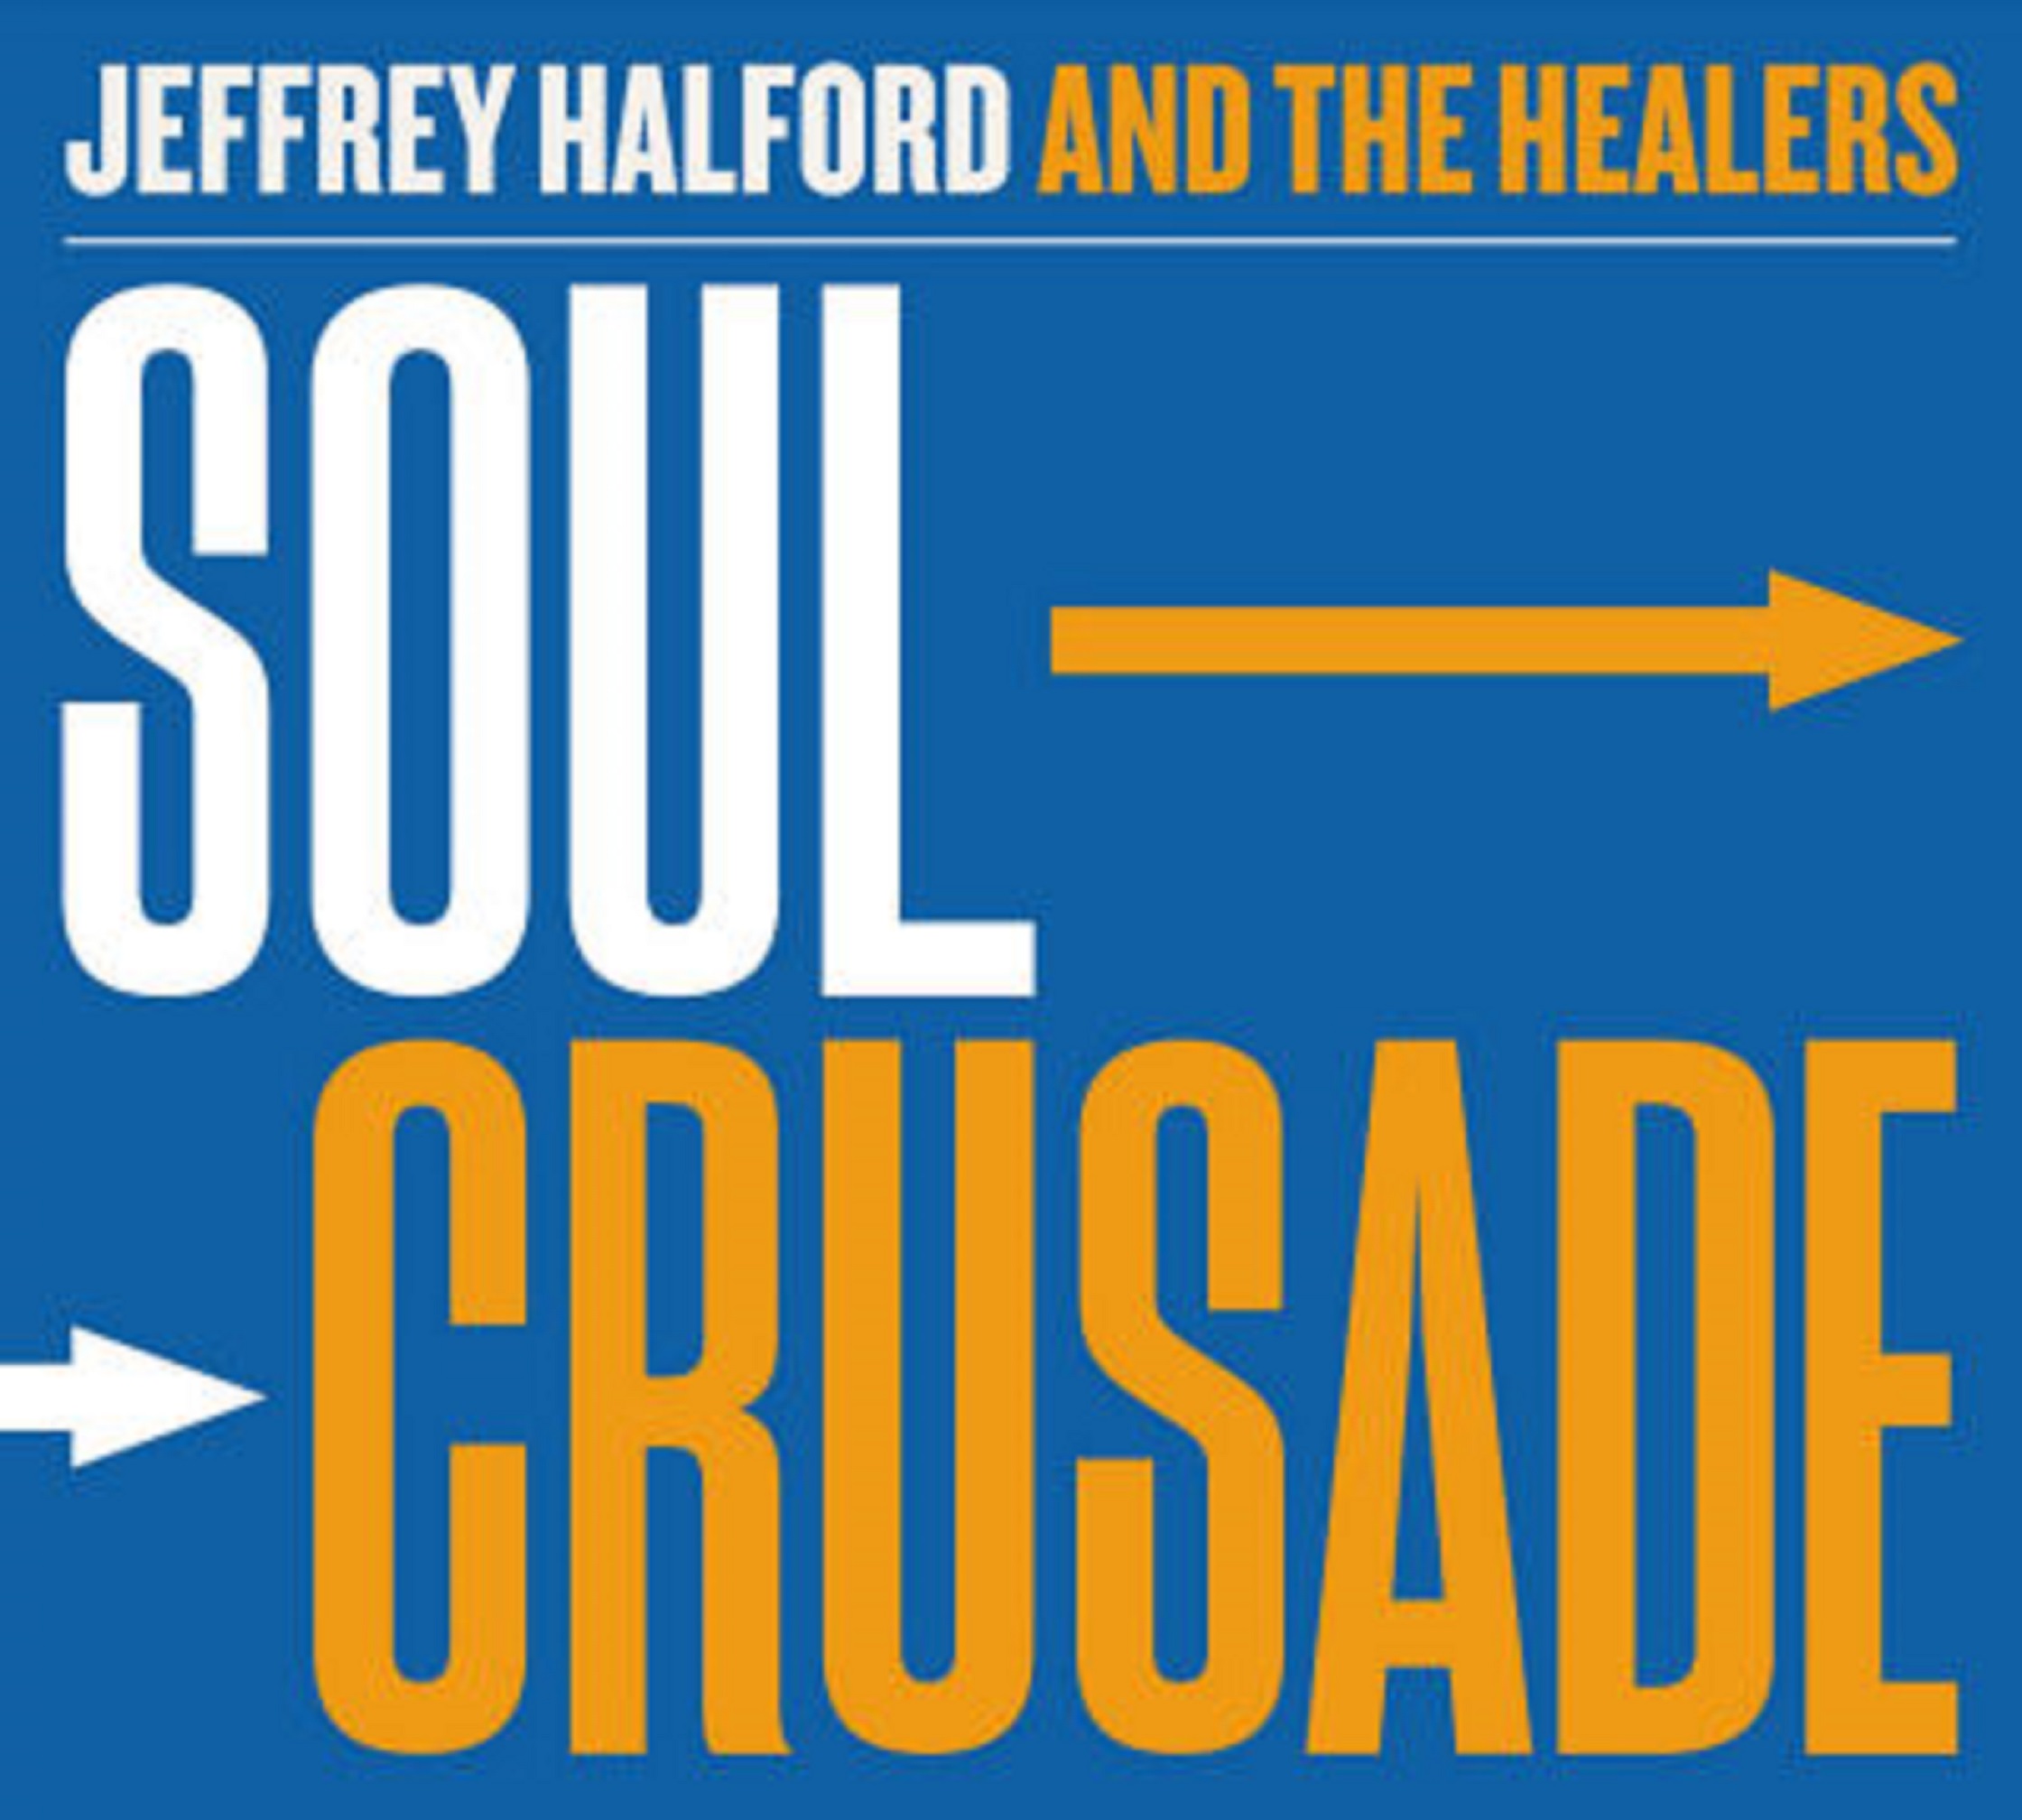 JEFFREY HALFORD & THE HEALERS SET TO RELEASE SOUL CRUSADE